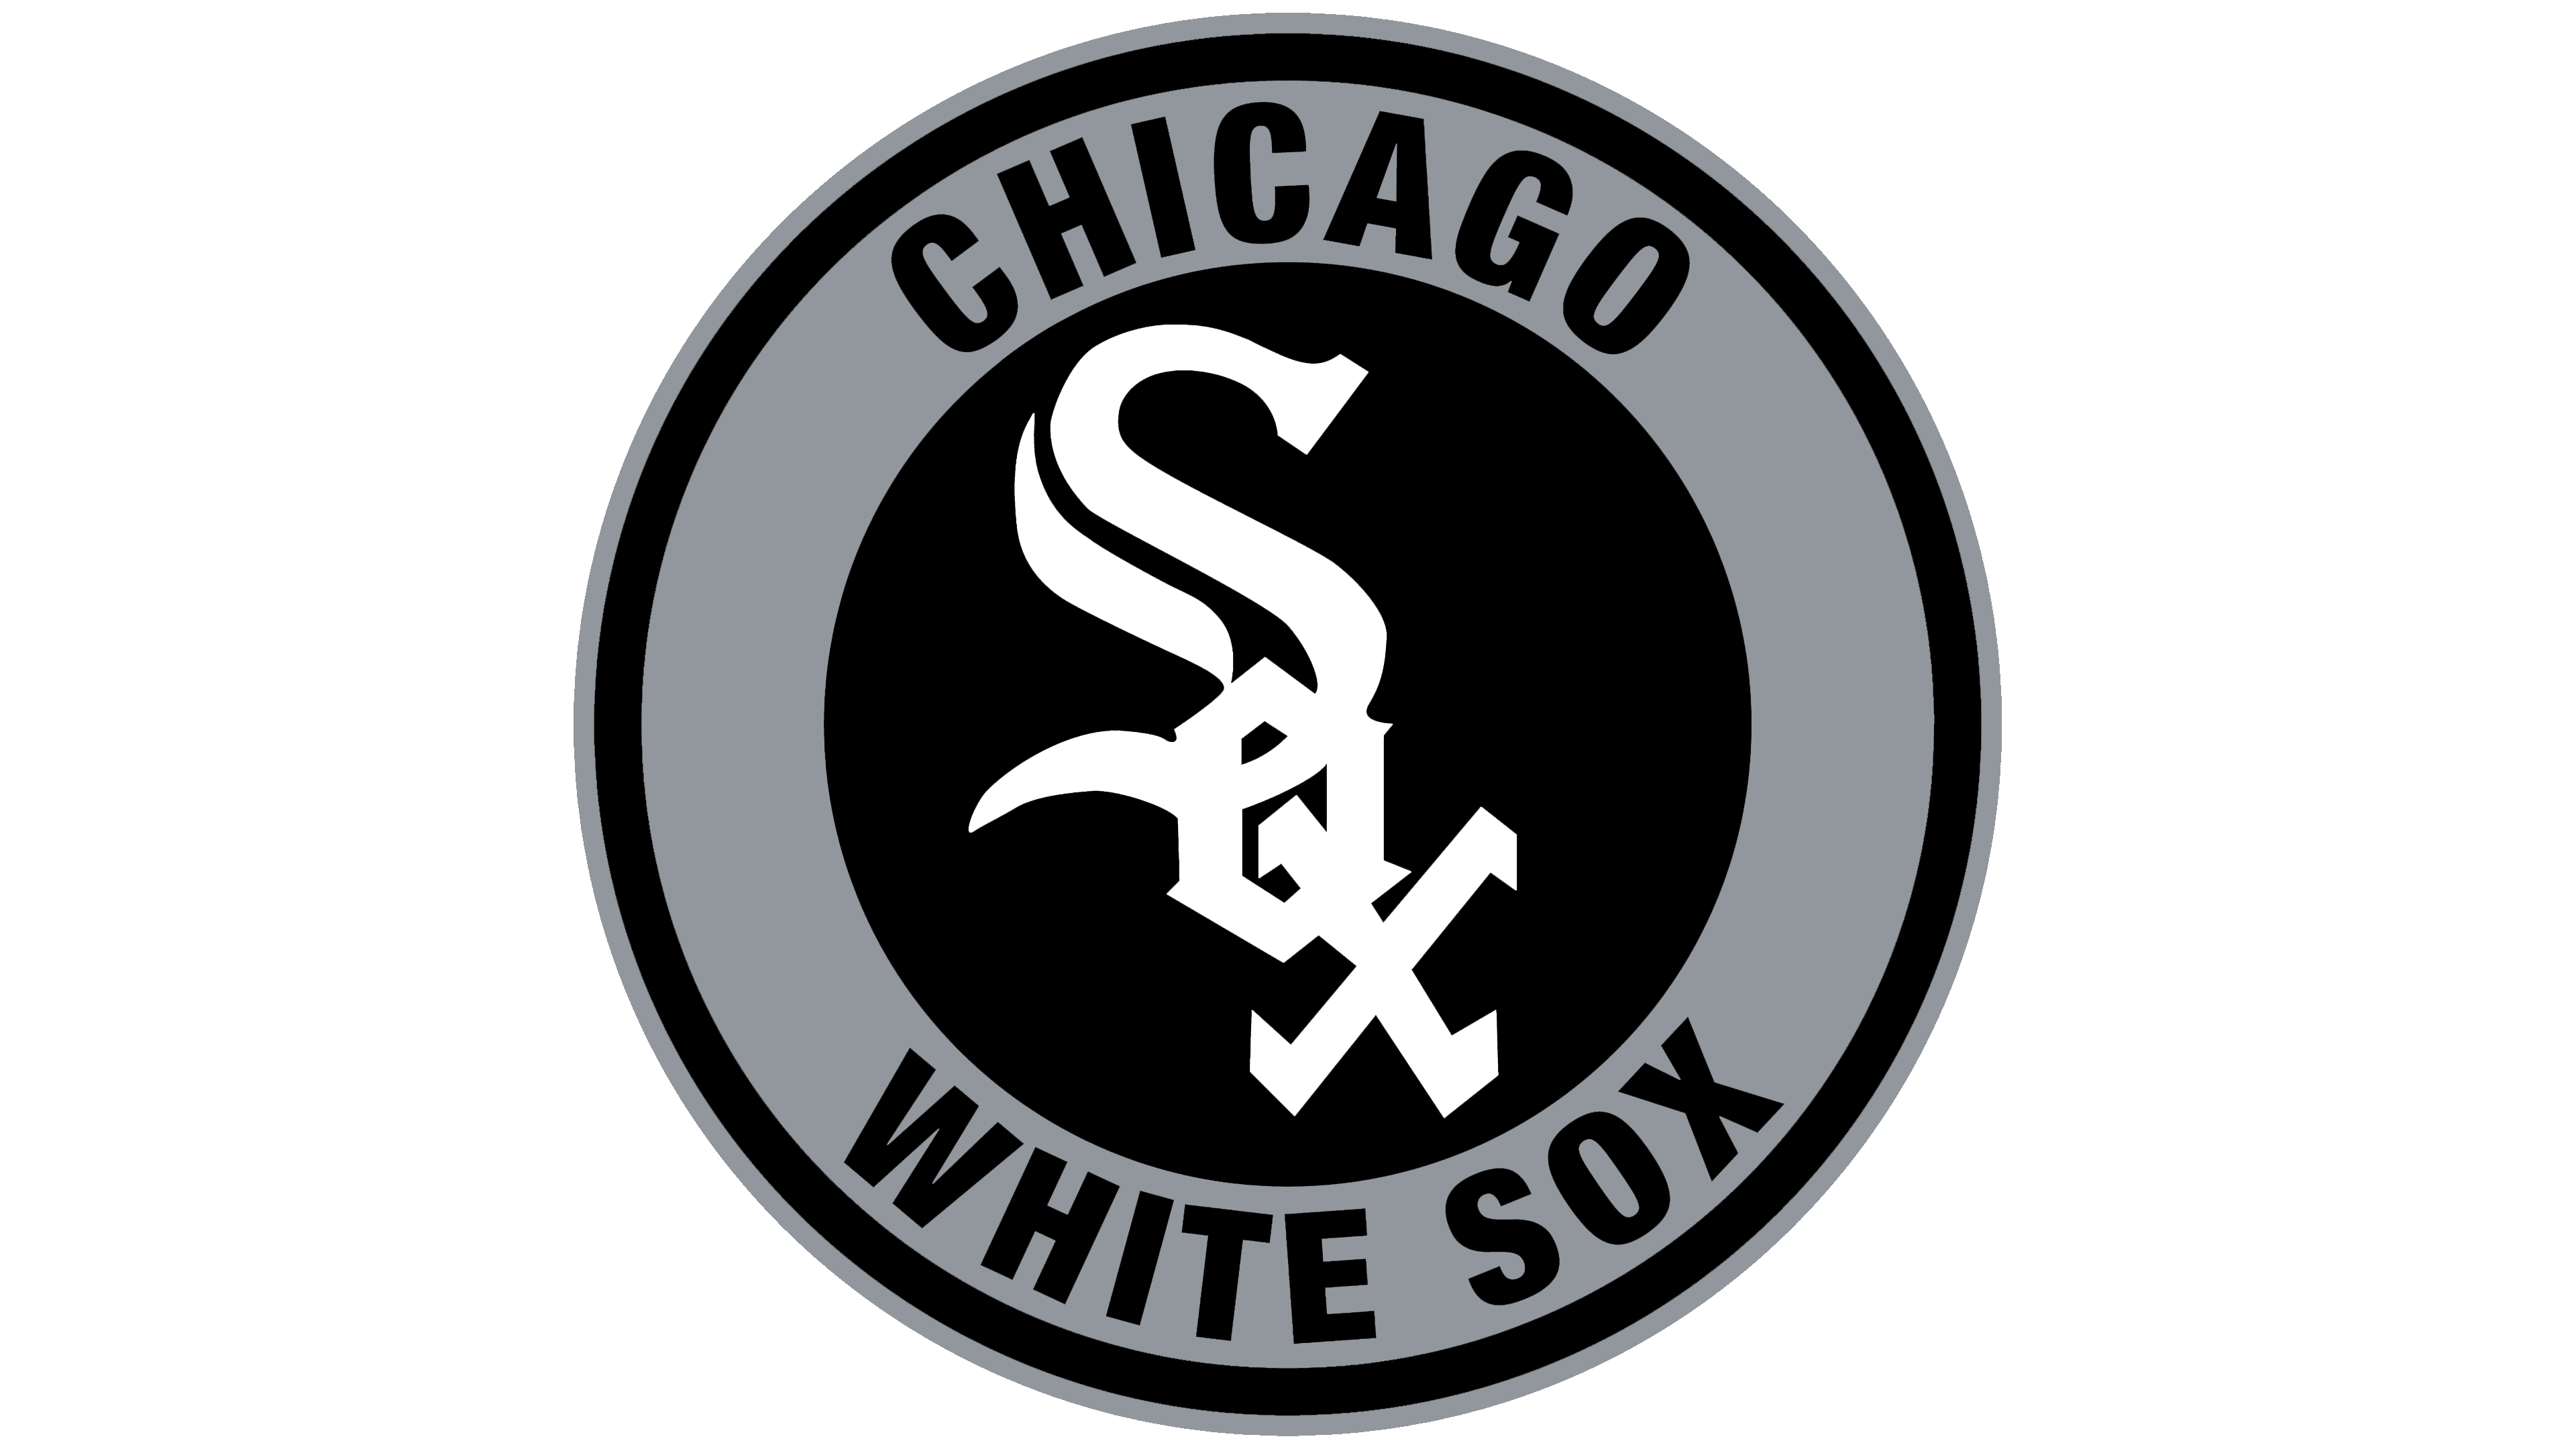 White Sox Png Free Logo Image